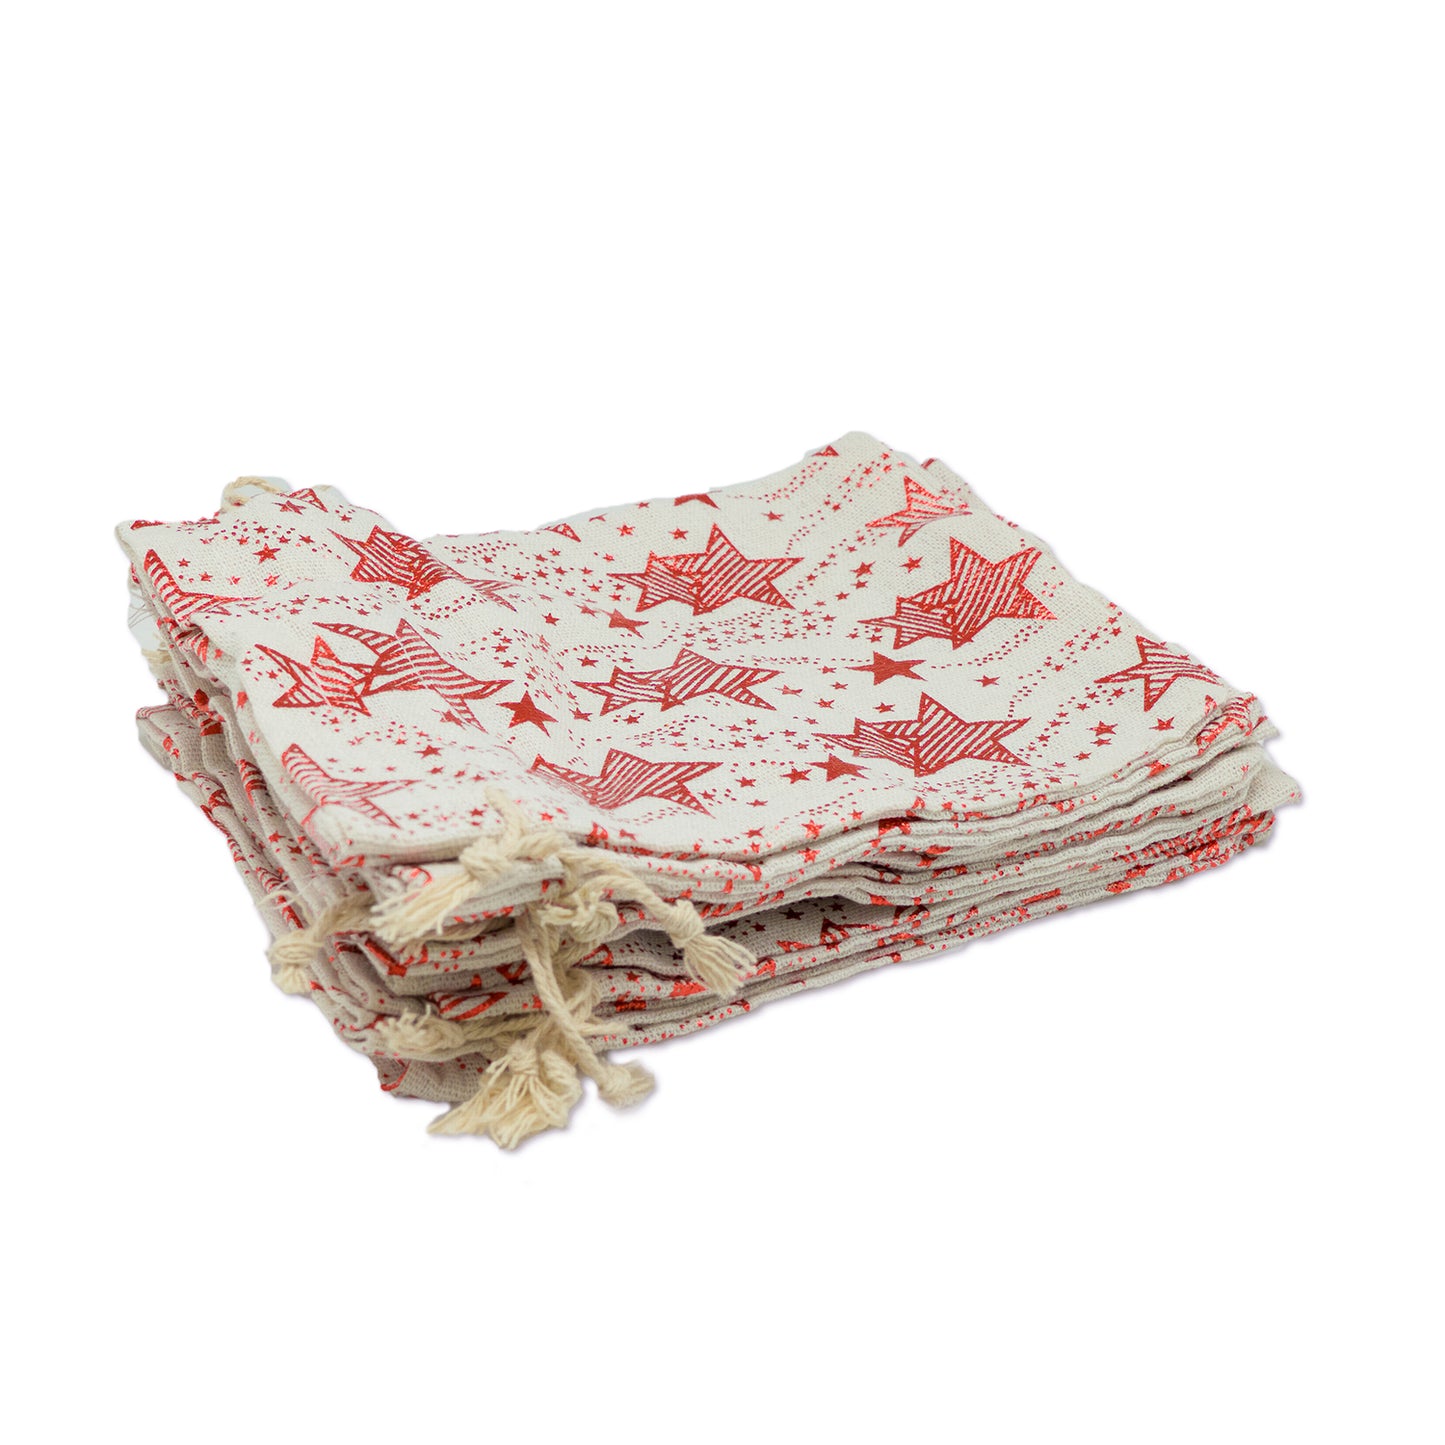 8" x 10" Cotton Muslin Red Star Drawstring Gift Bags